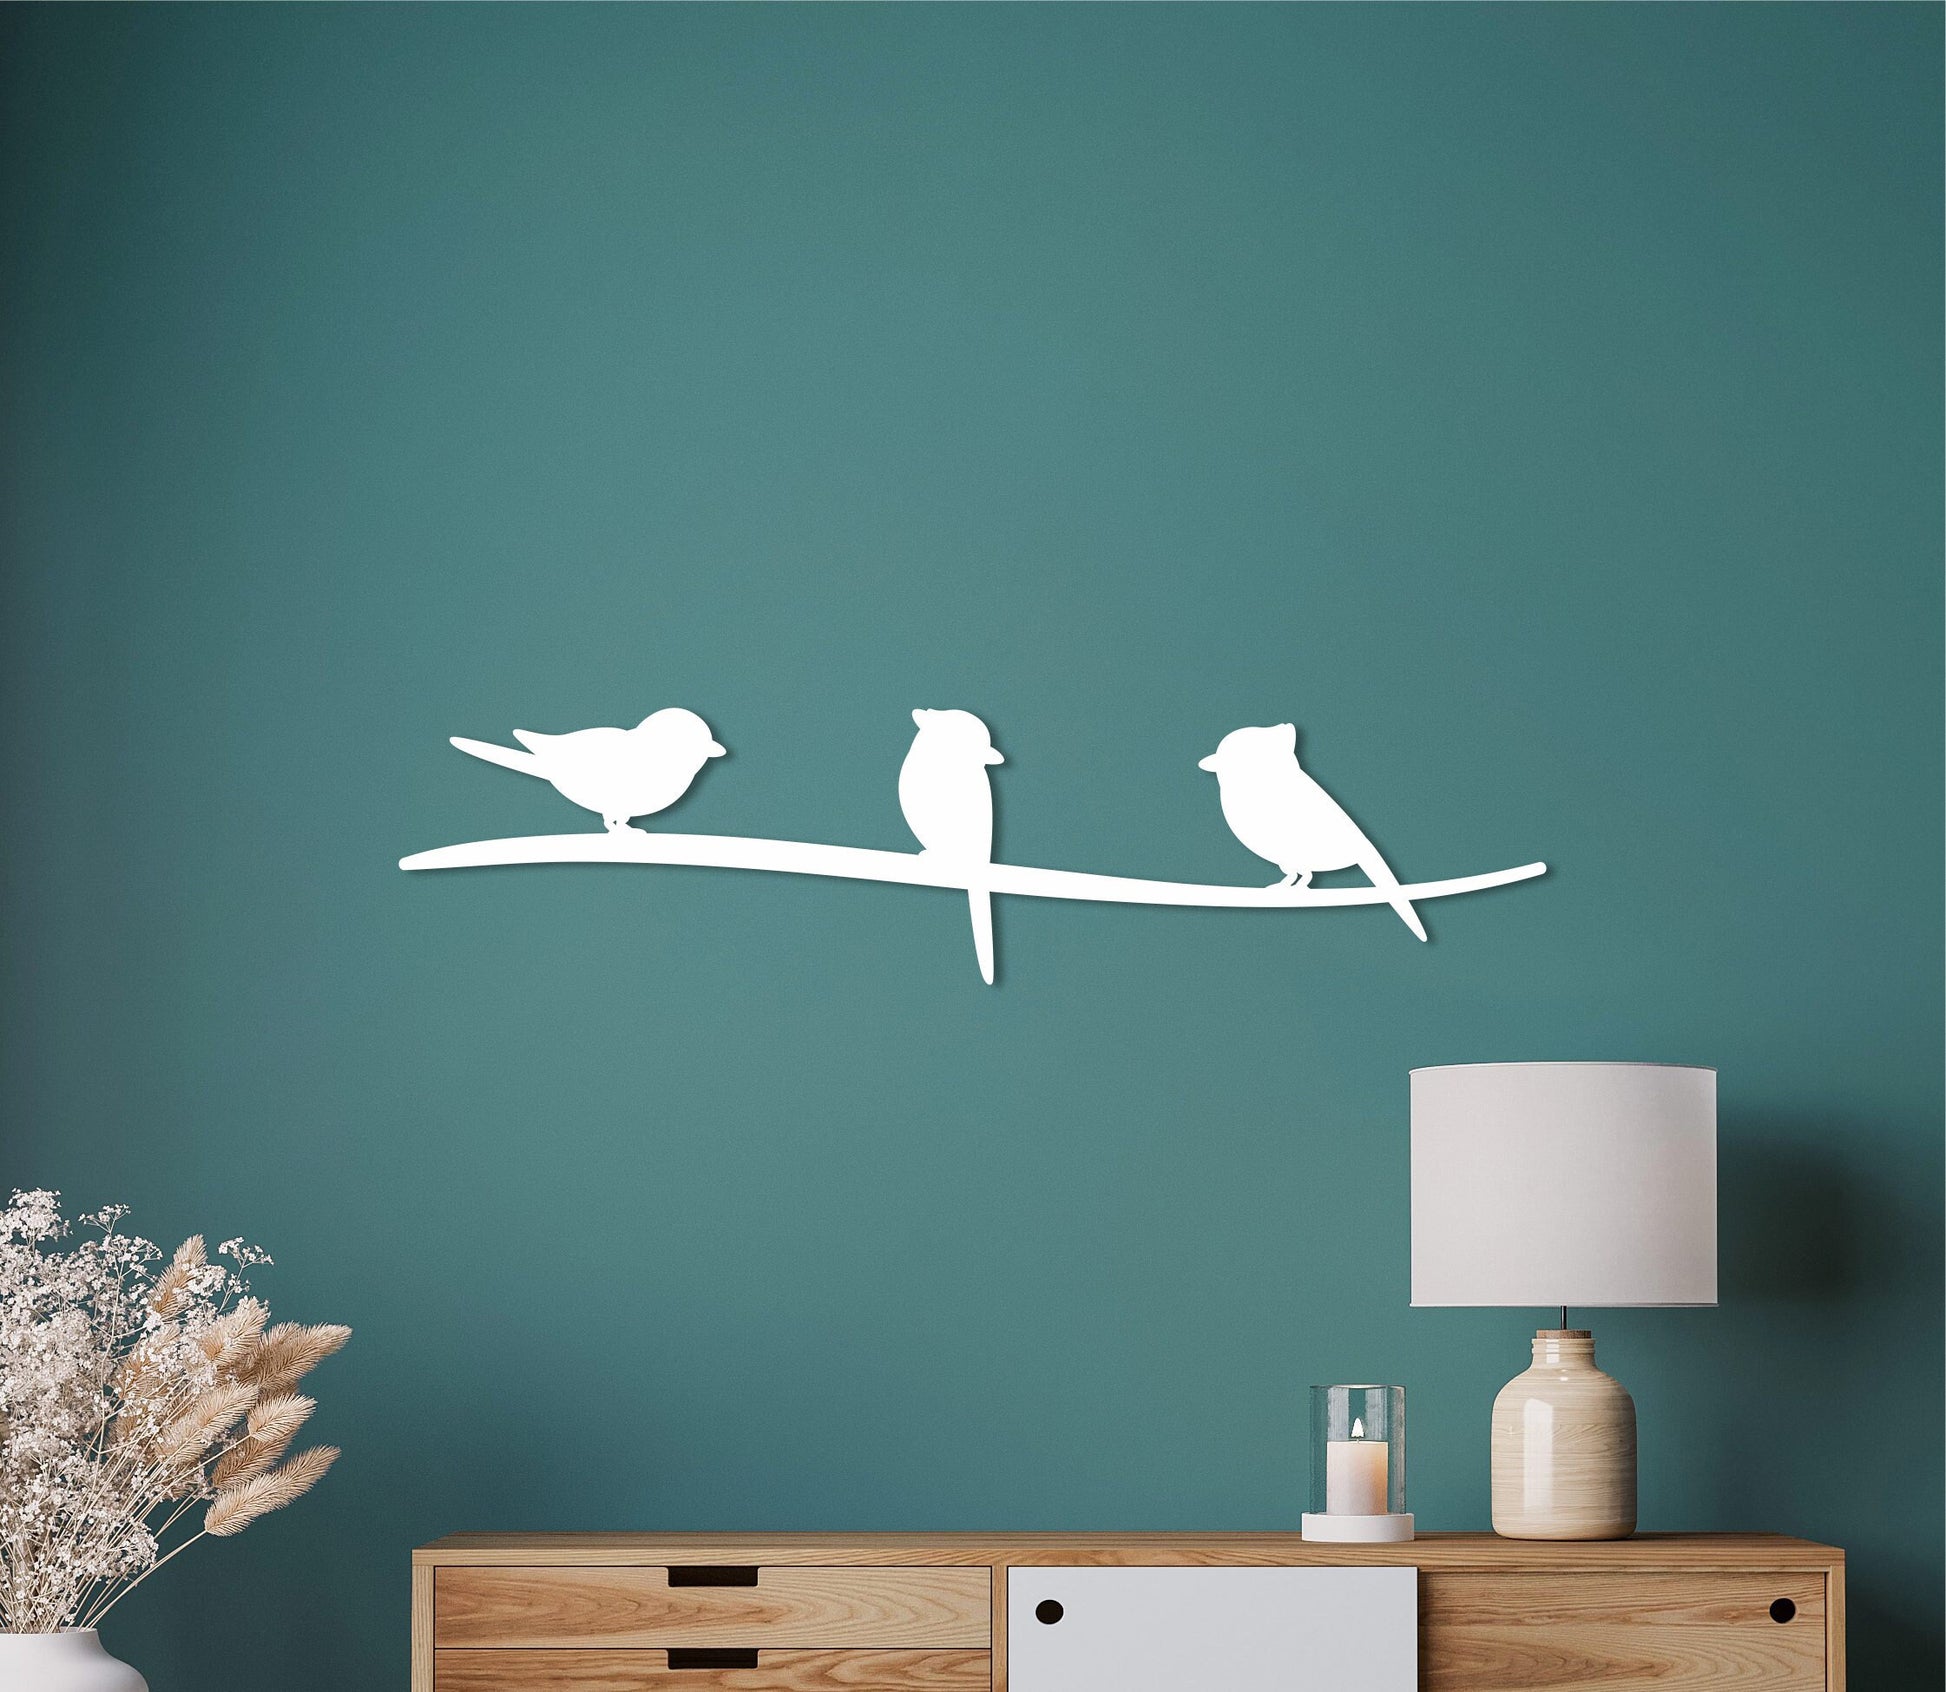 Three little birds, birds on a wire art, bird on a wire, wooden bird, wall decor over the bed, home decor, small birds, birds on a branch